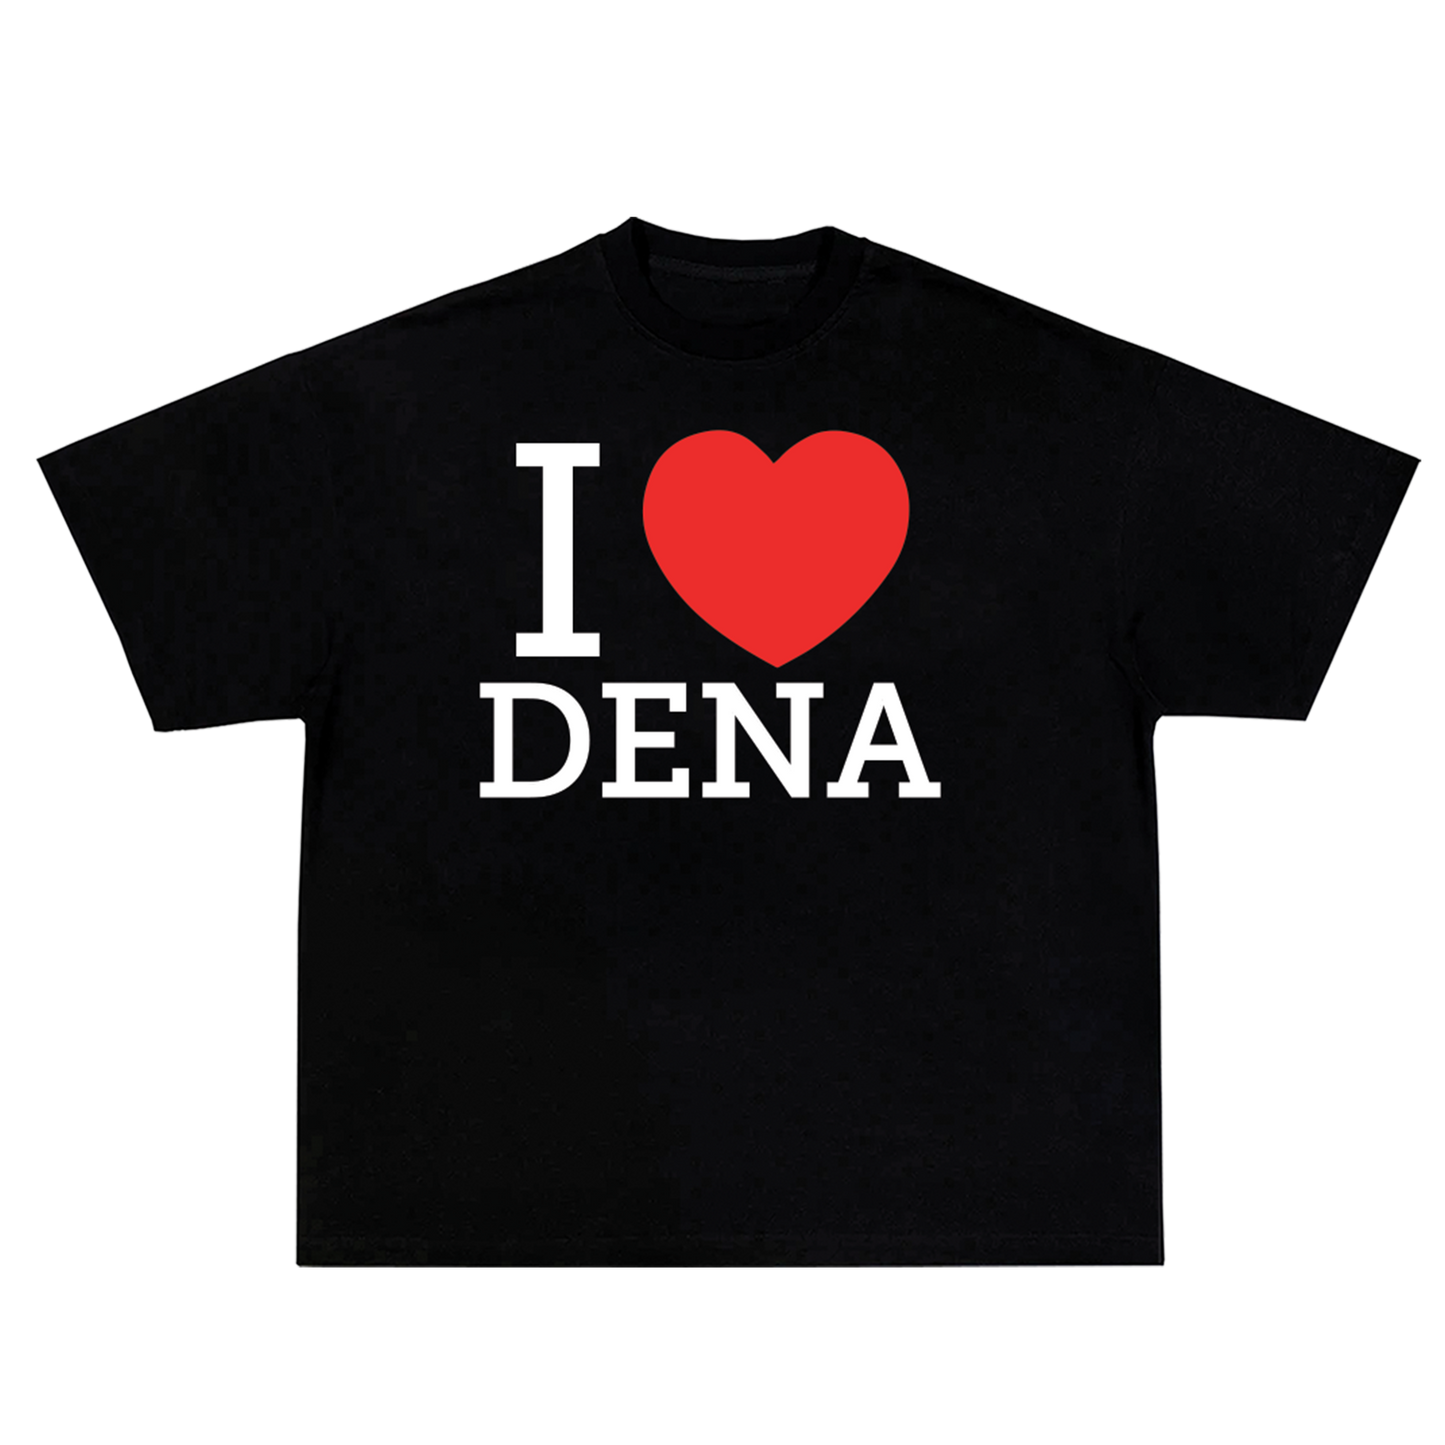 I LOVE DENA - BLACK TEE